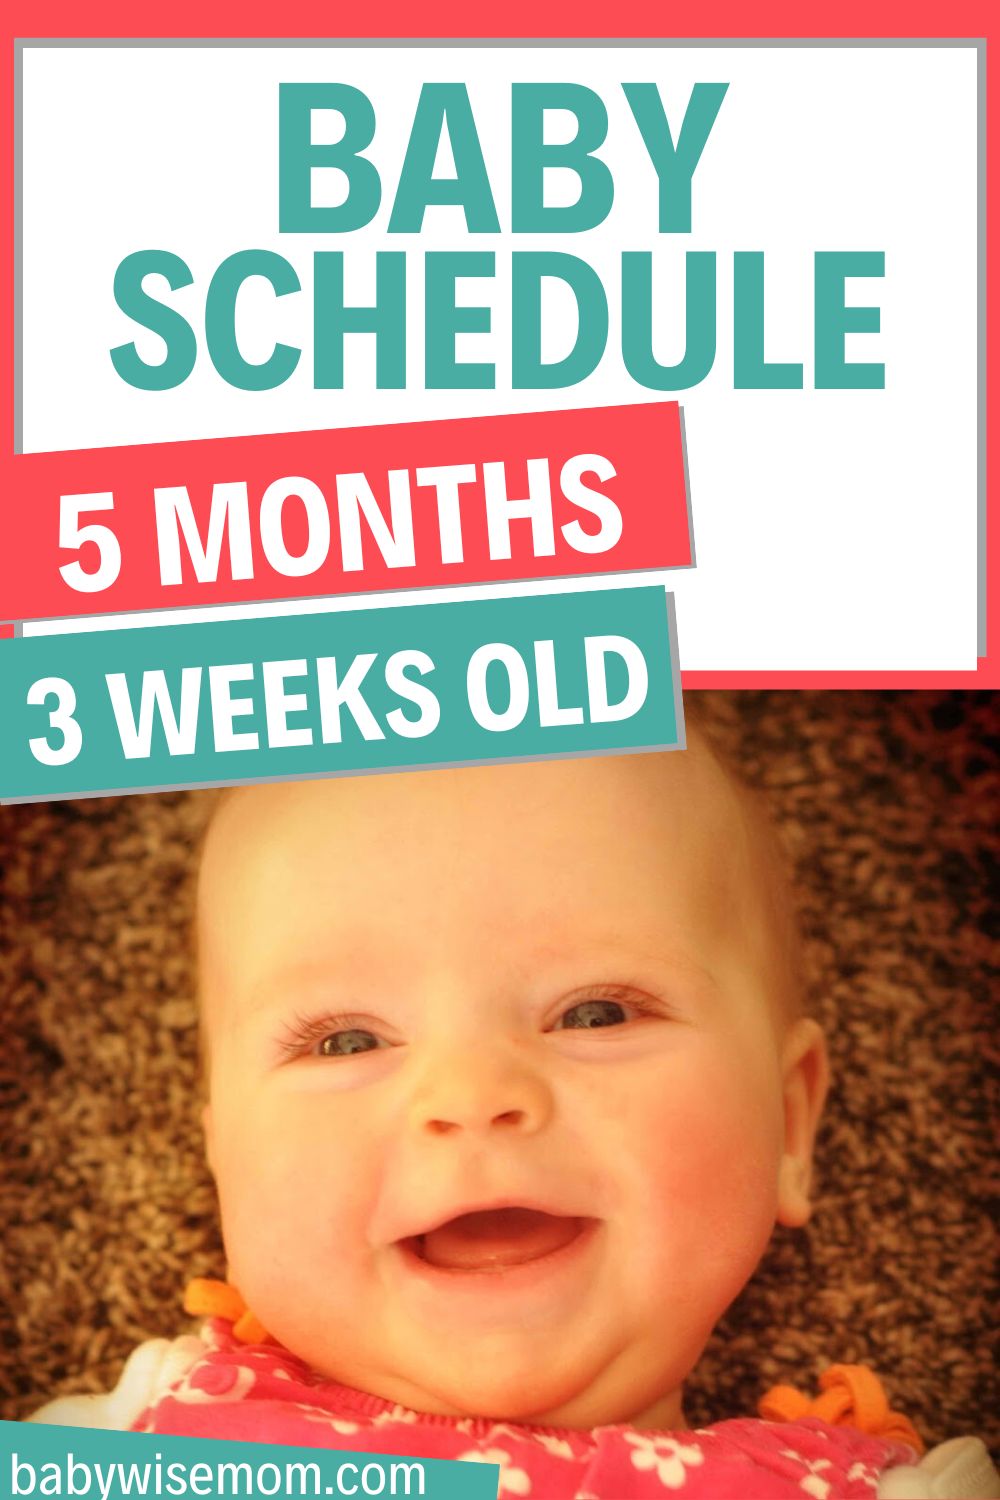 Baby Schedule 5 months 3 weeks old